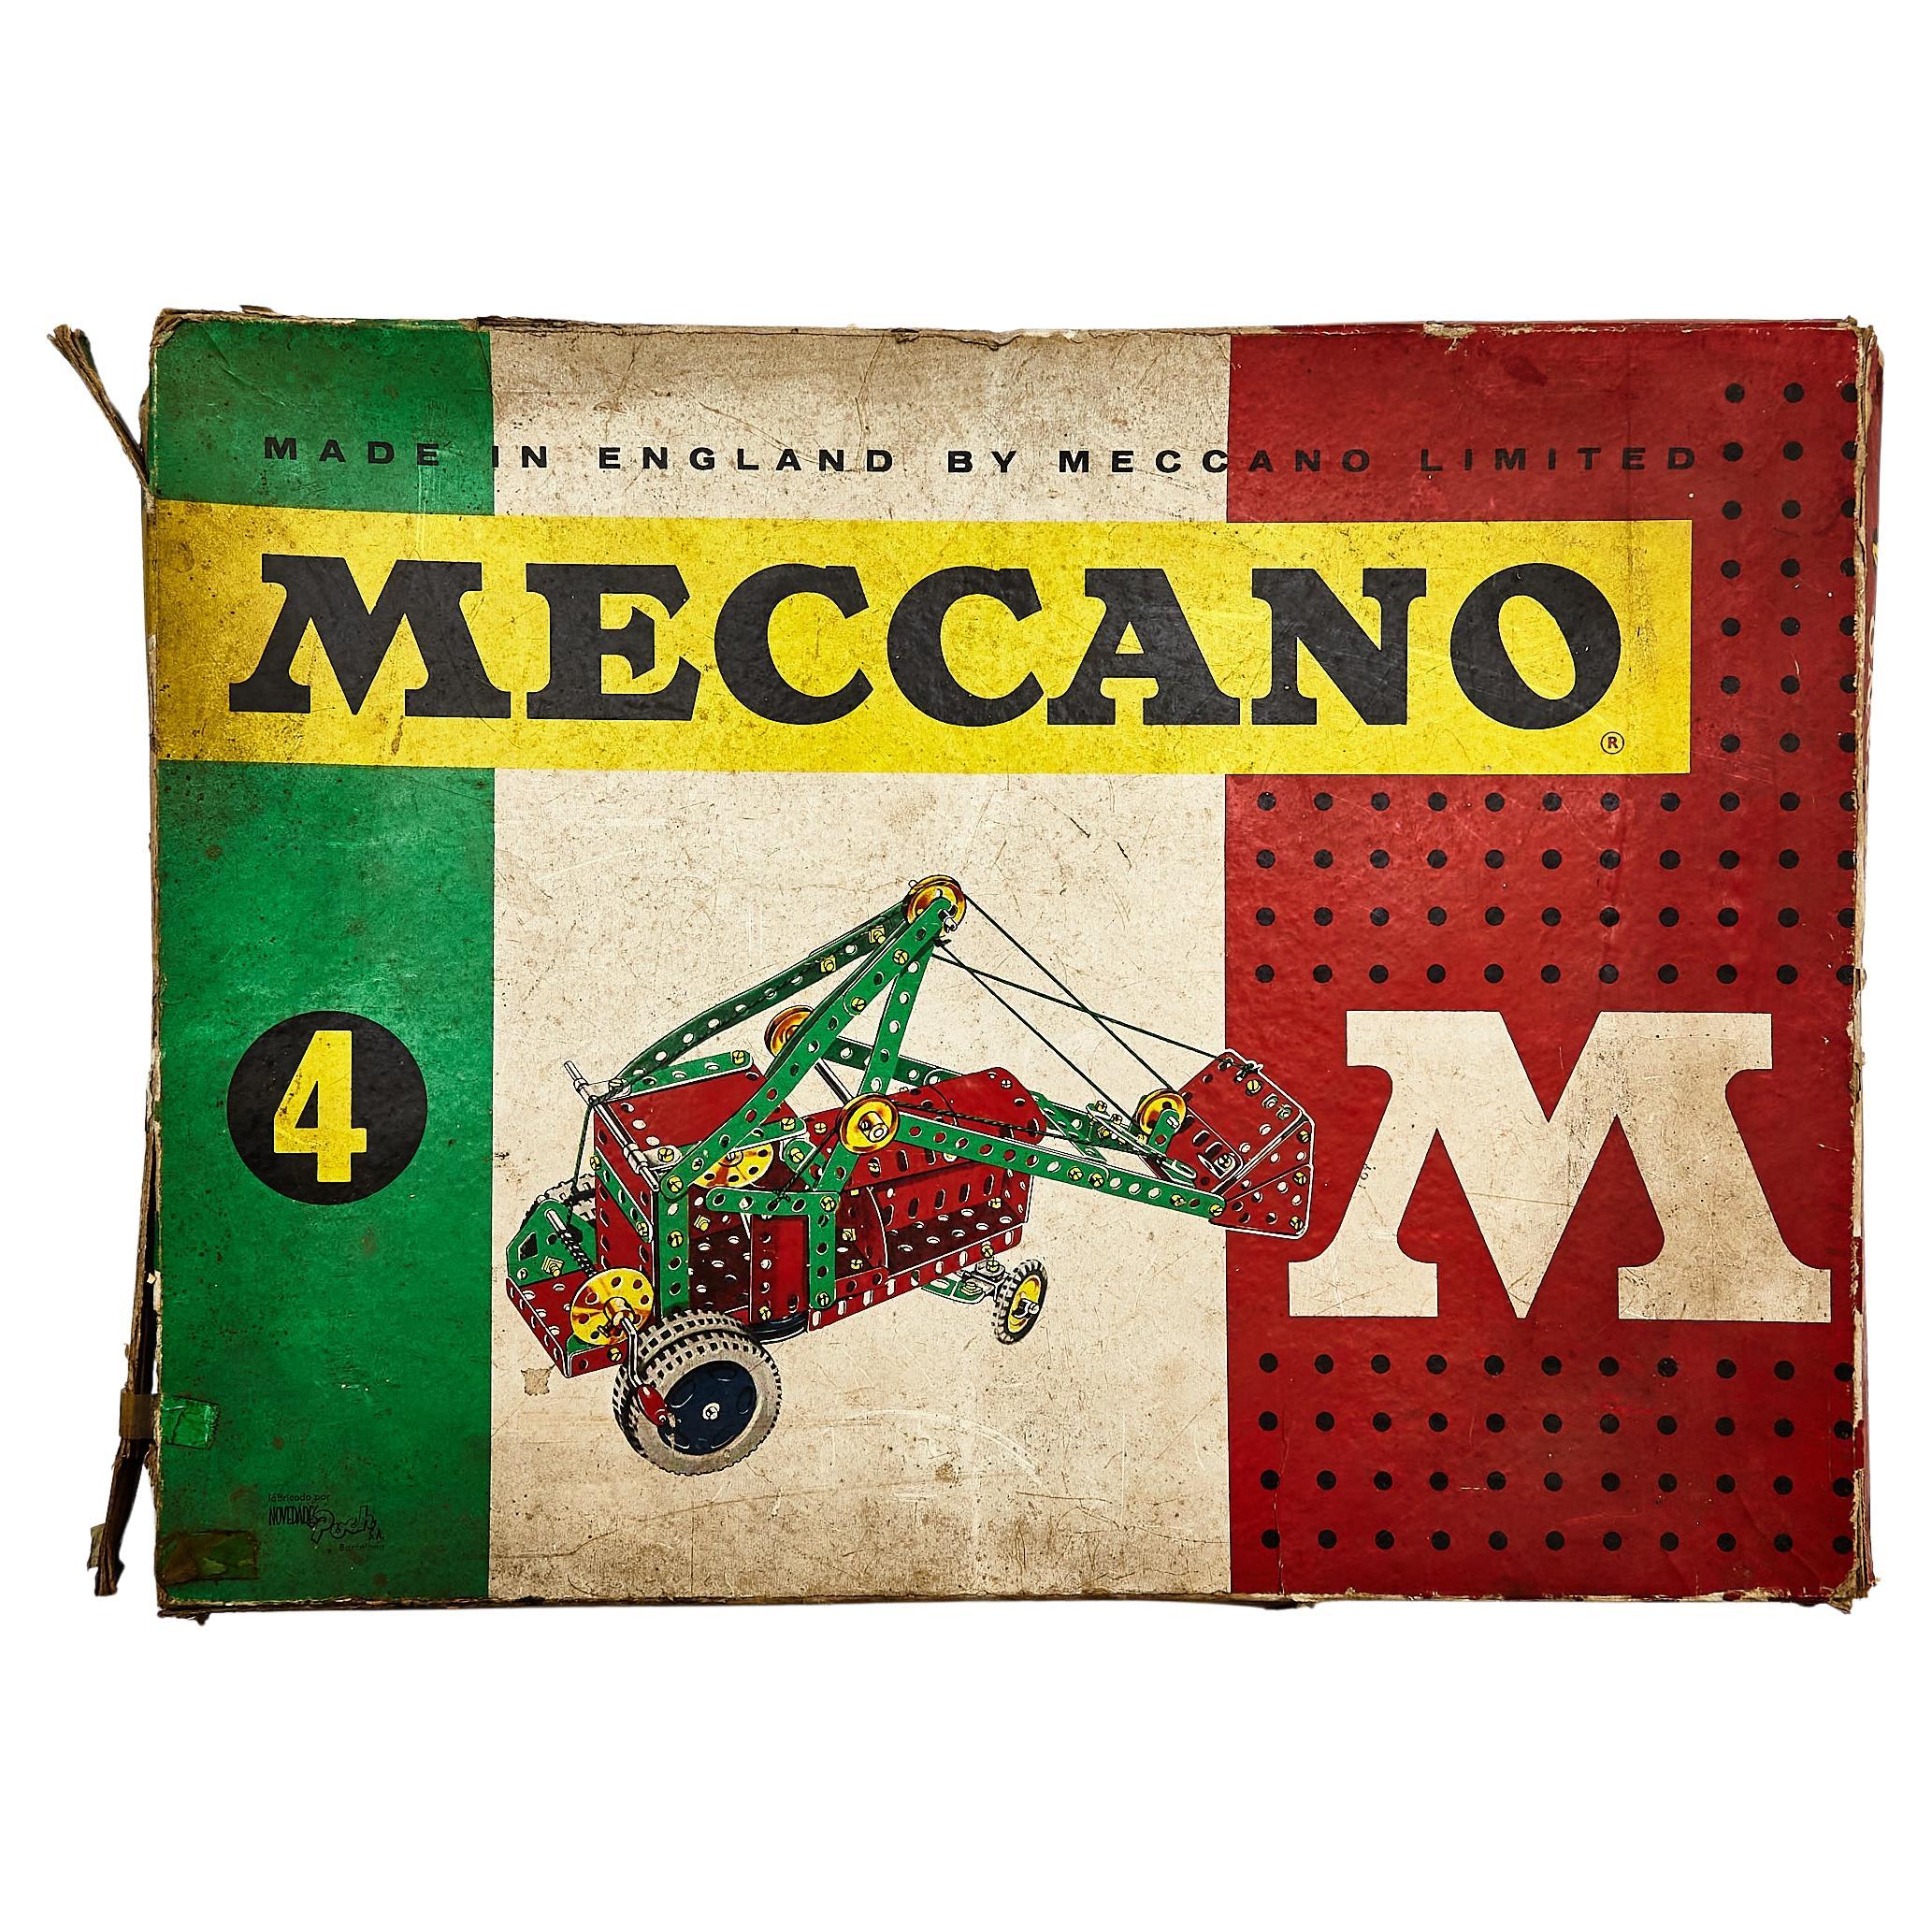 Vintage Meccano Building Game in Original Box